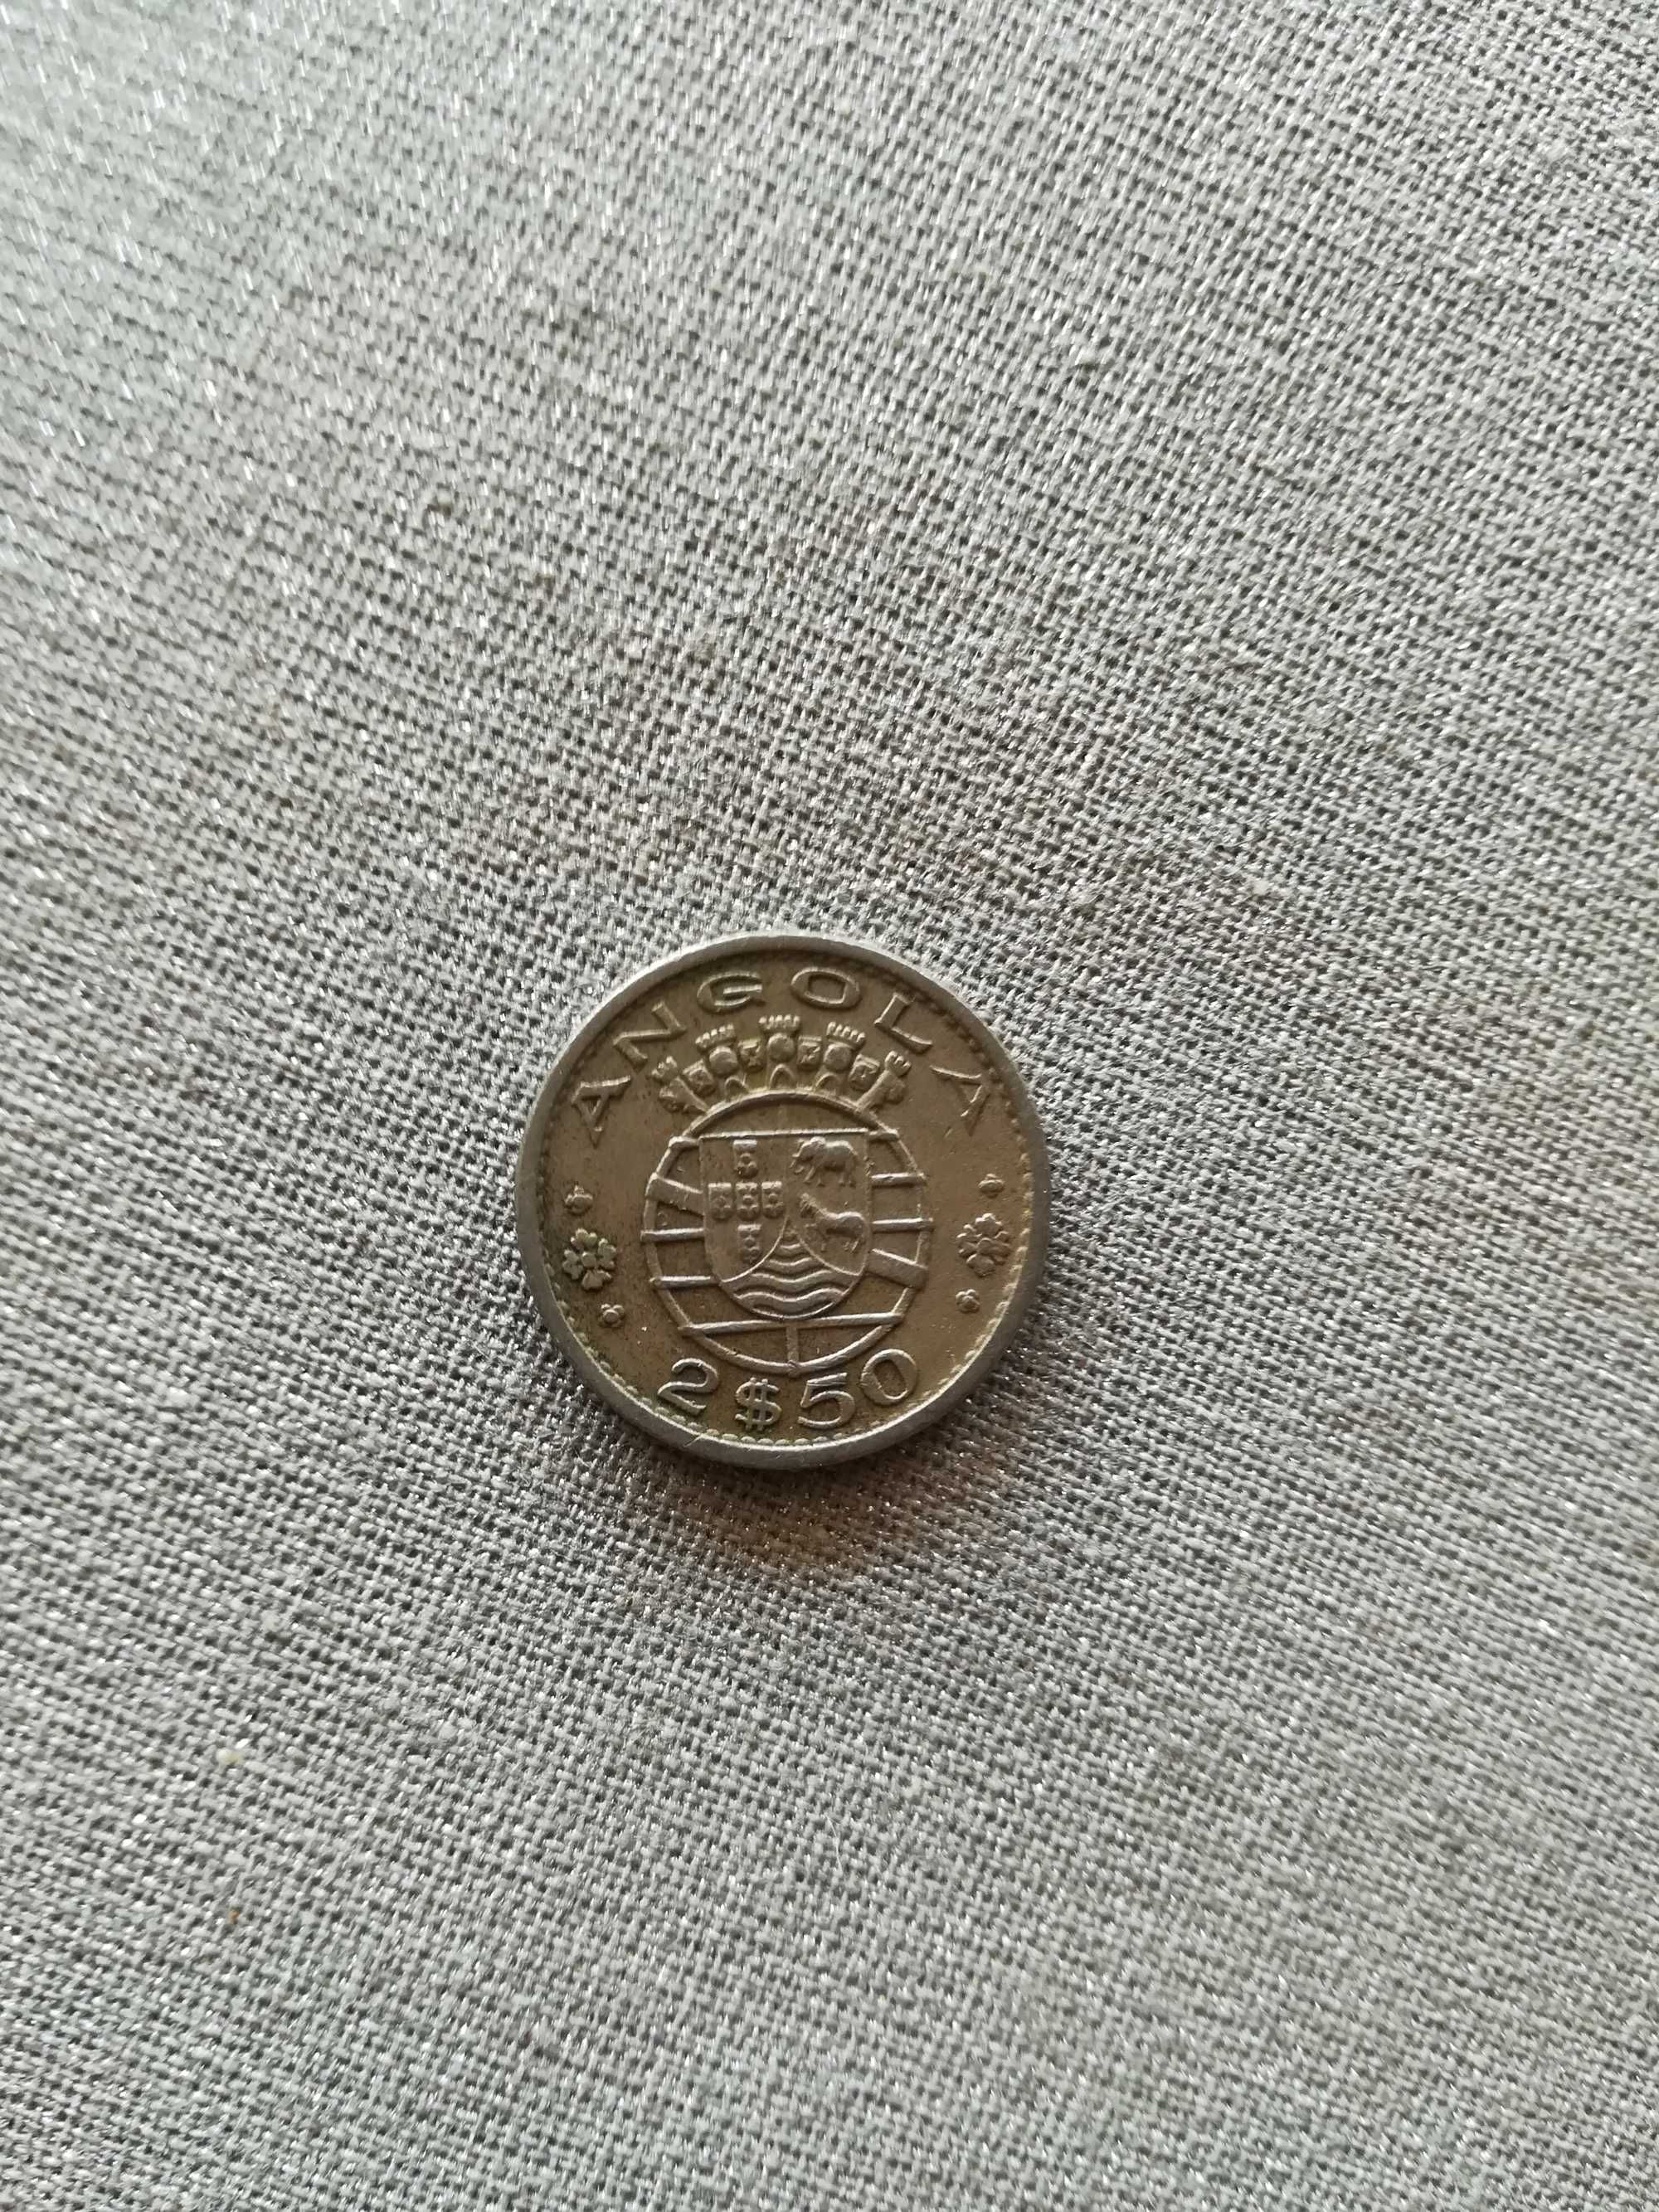 Moeda 2$50 1969 Portugal